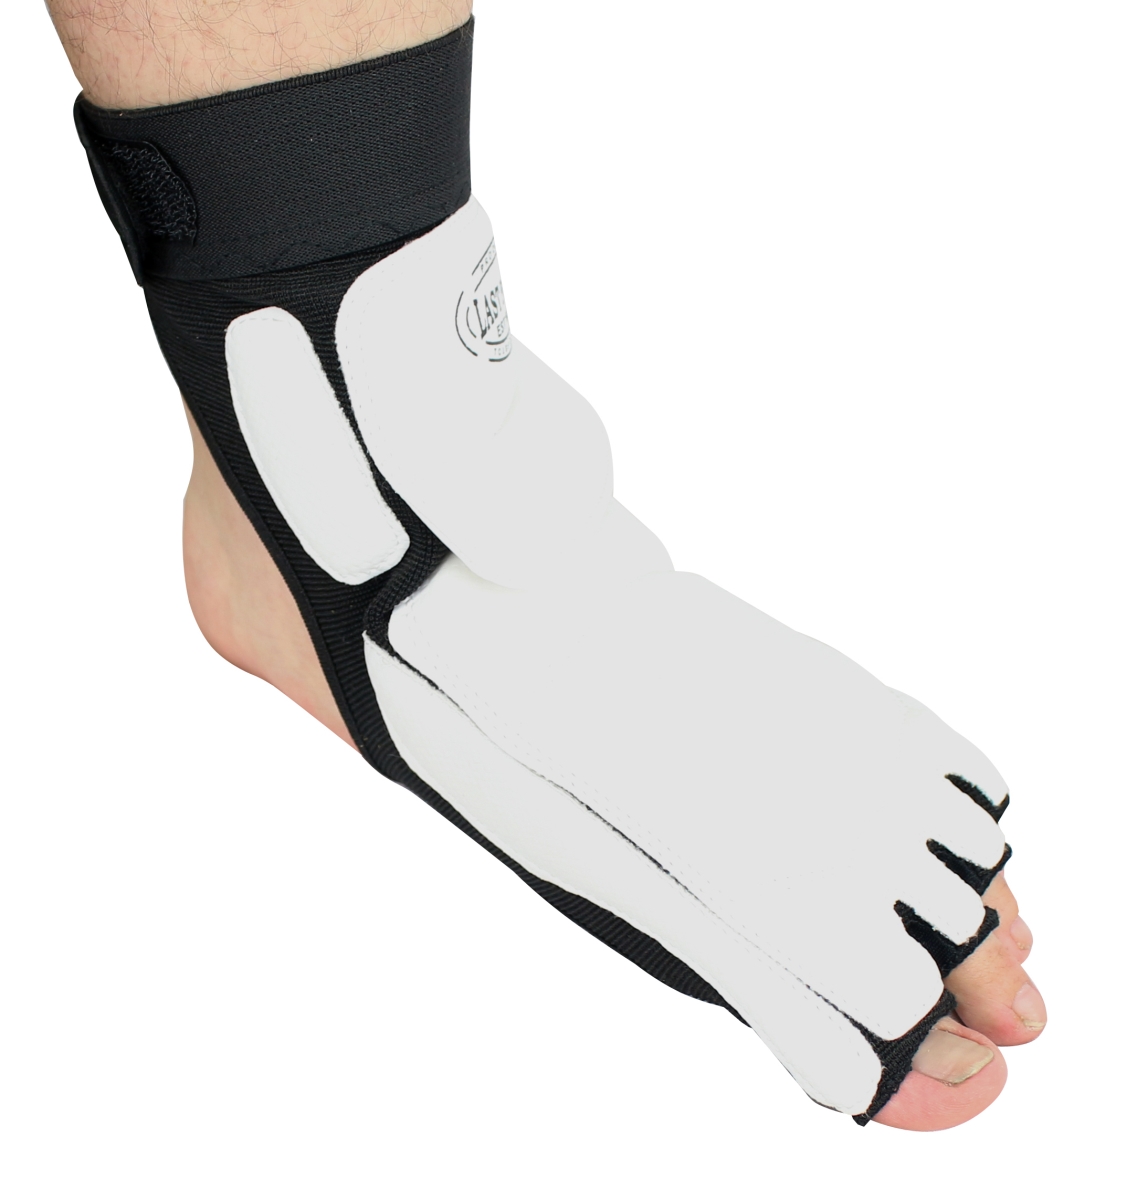 9619-m High Quality Taekwondo Foot Ankle Support Protector Kick Boxing Footwear - Medium